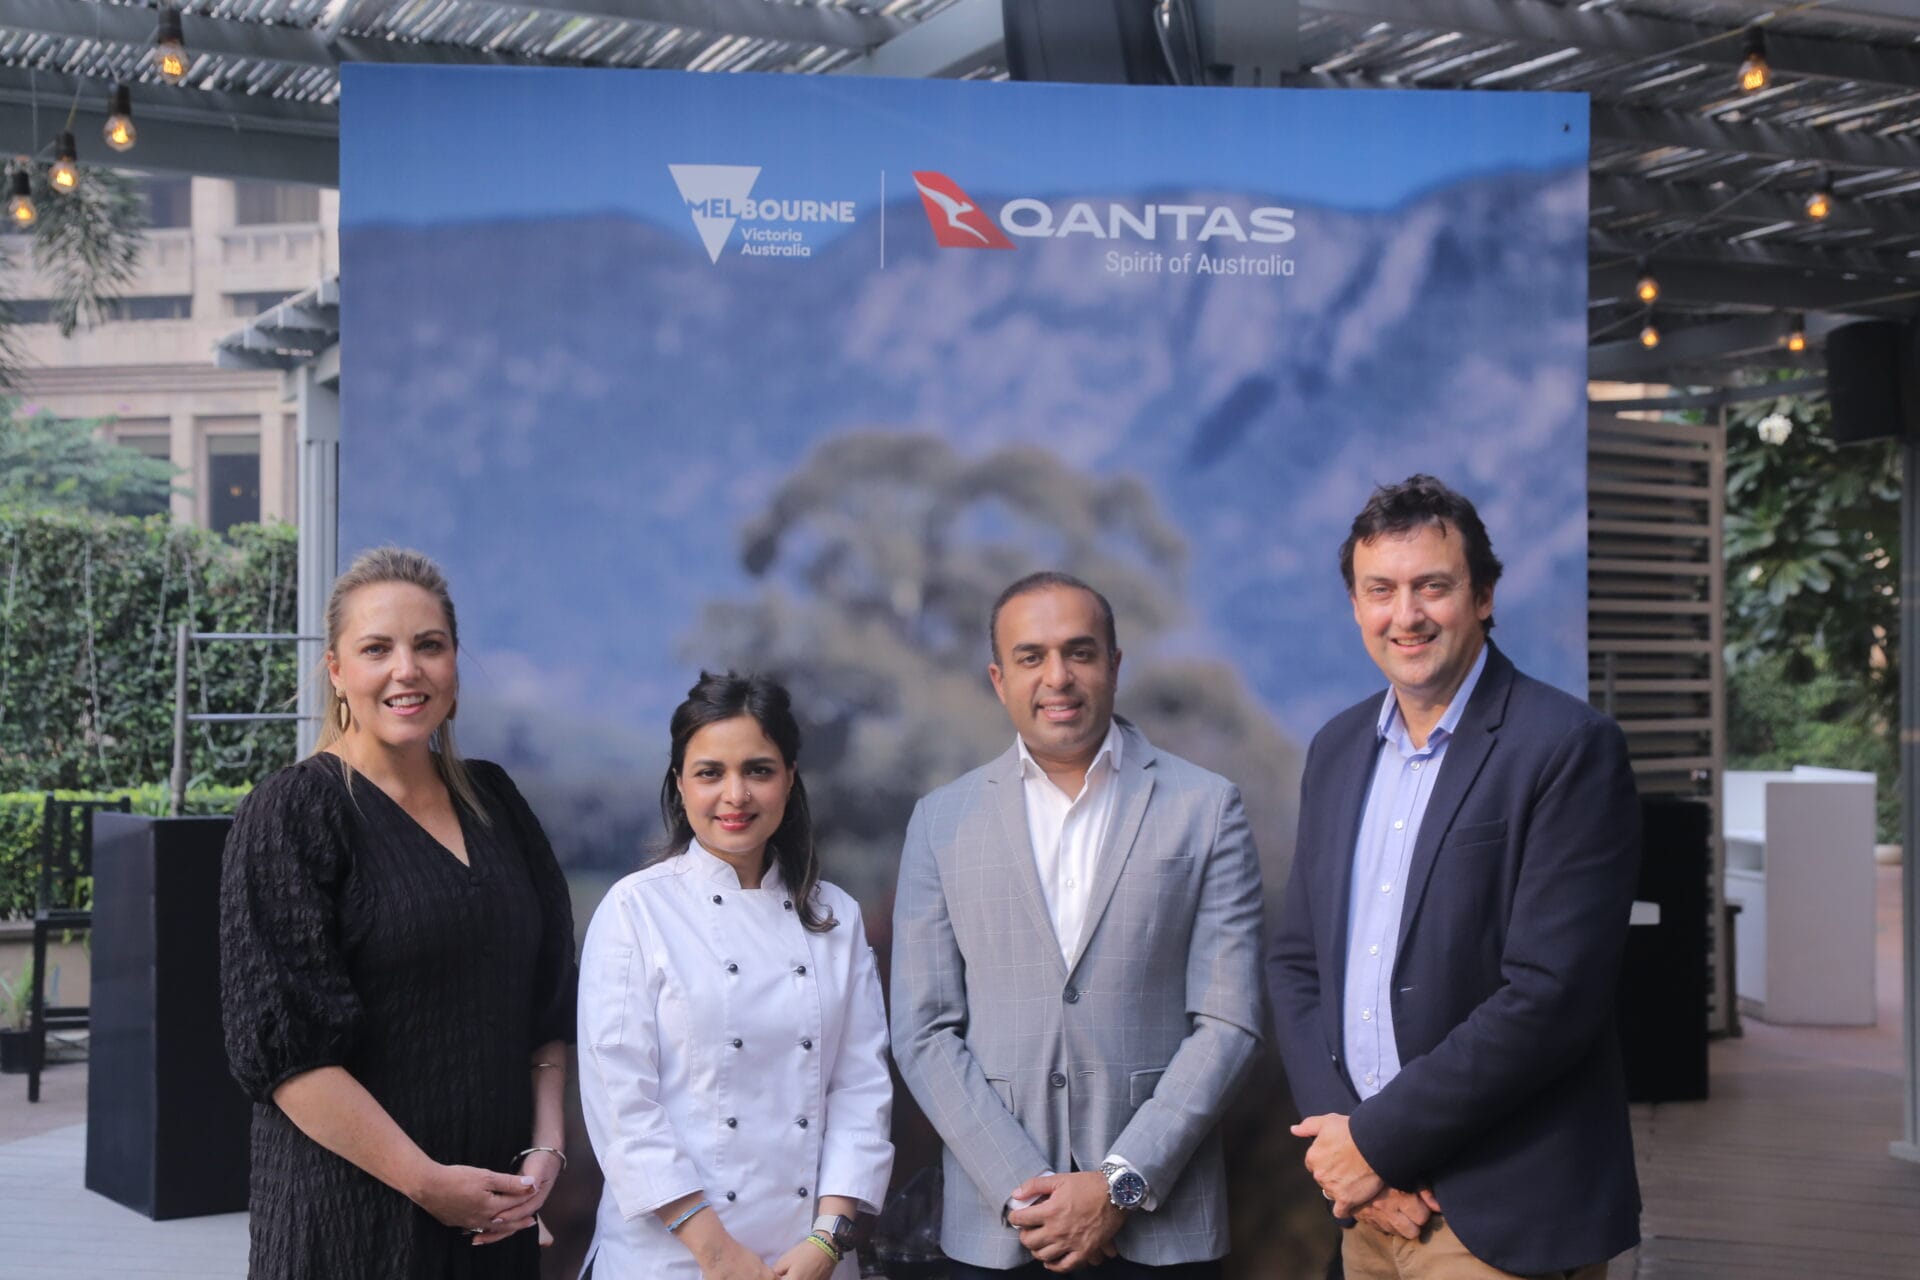 Visit Victoria, Qantas present ‘Flavours of Melbourne’ to showcase diversity of cuisine